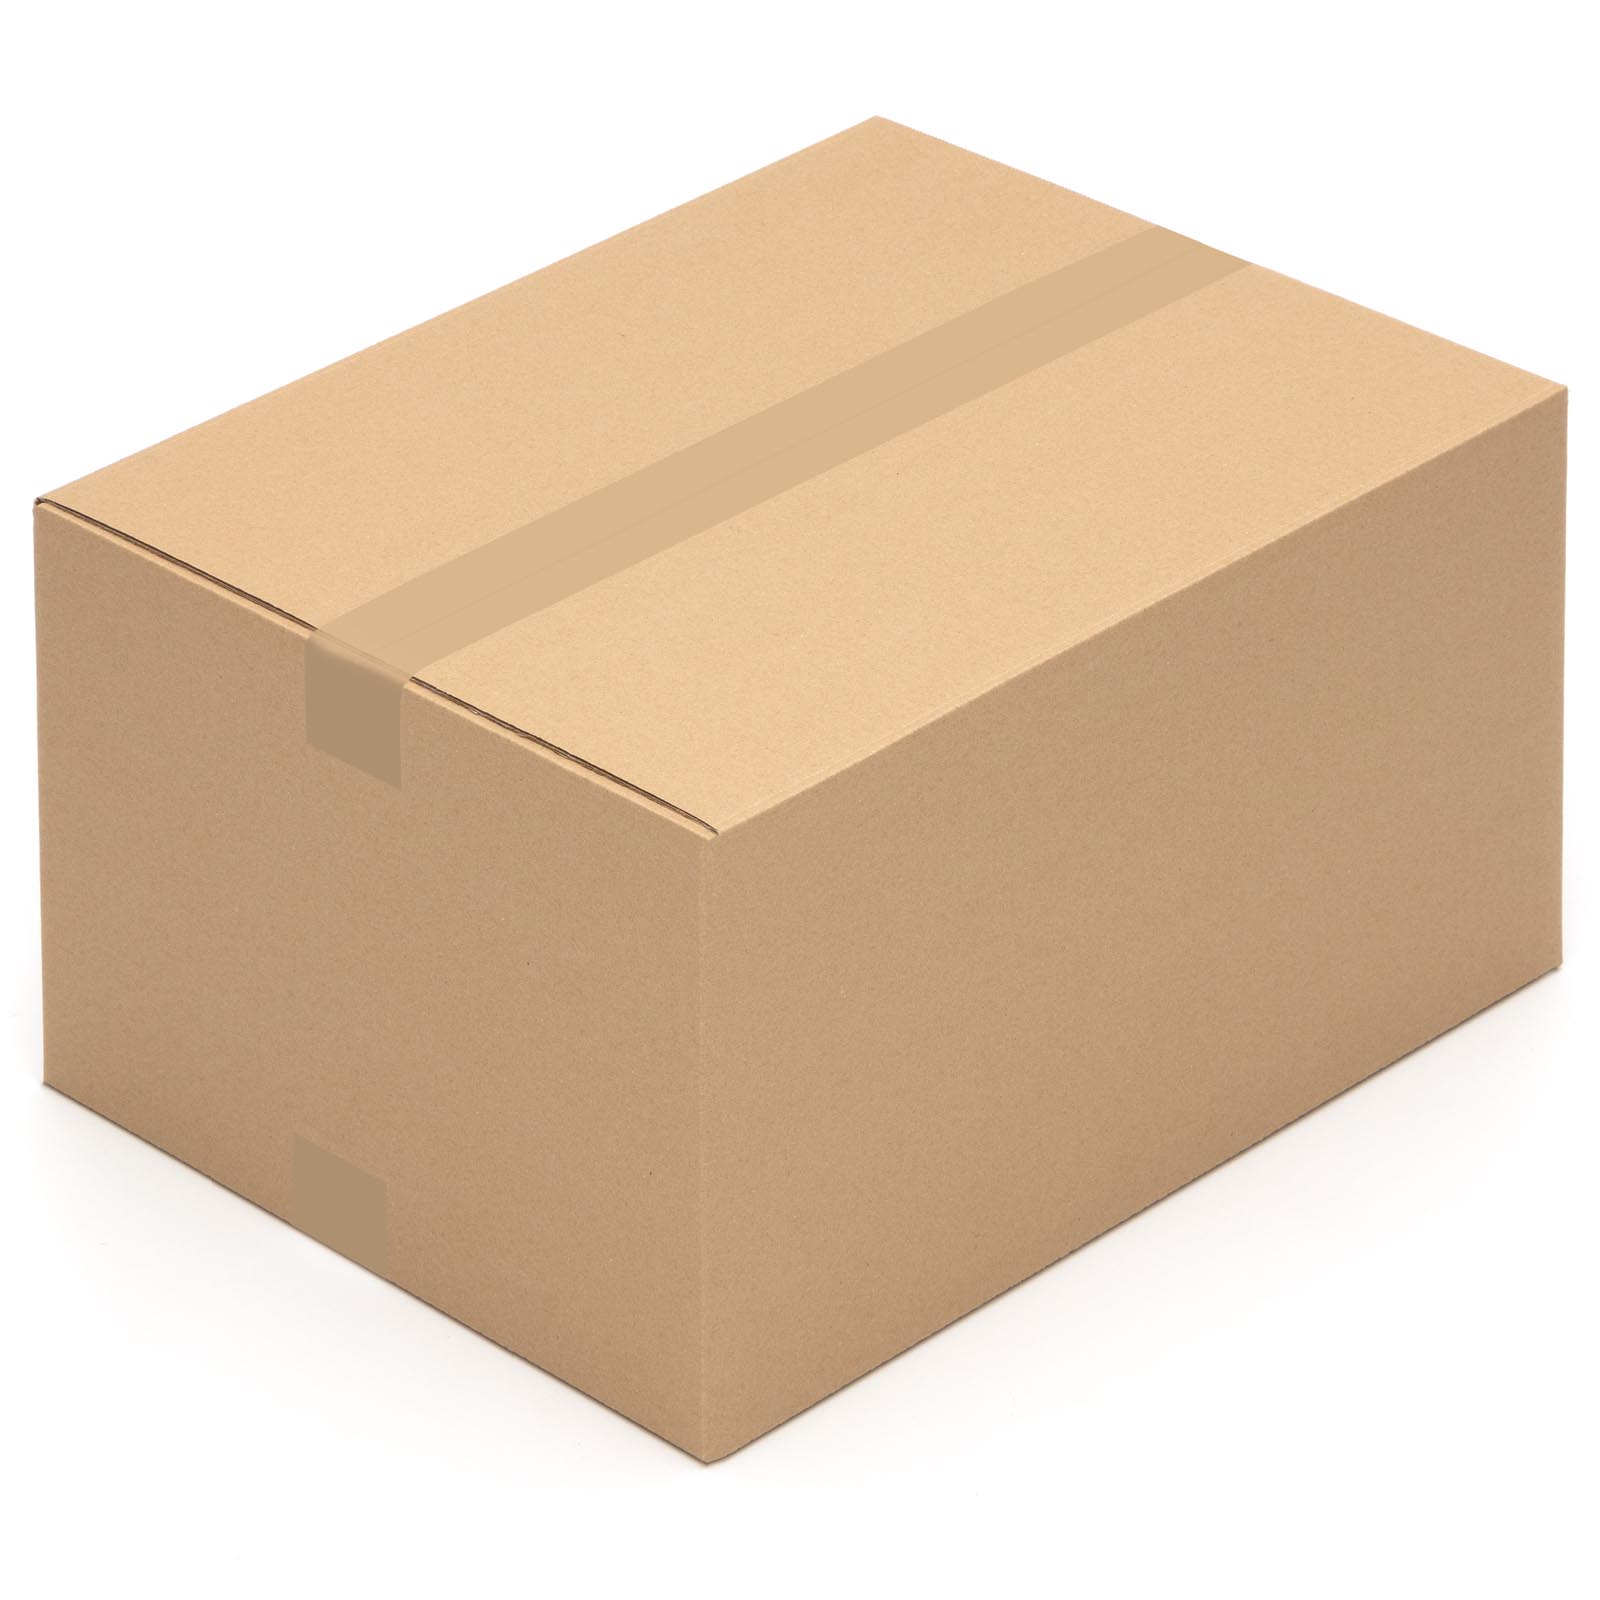 125 Kartons 450 x 350 x 200 mm Schachtel Verpackung Paket Versand Box DPD DHL 